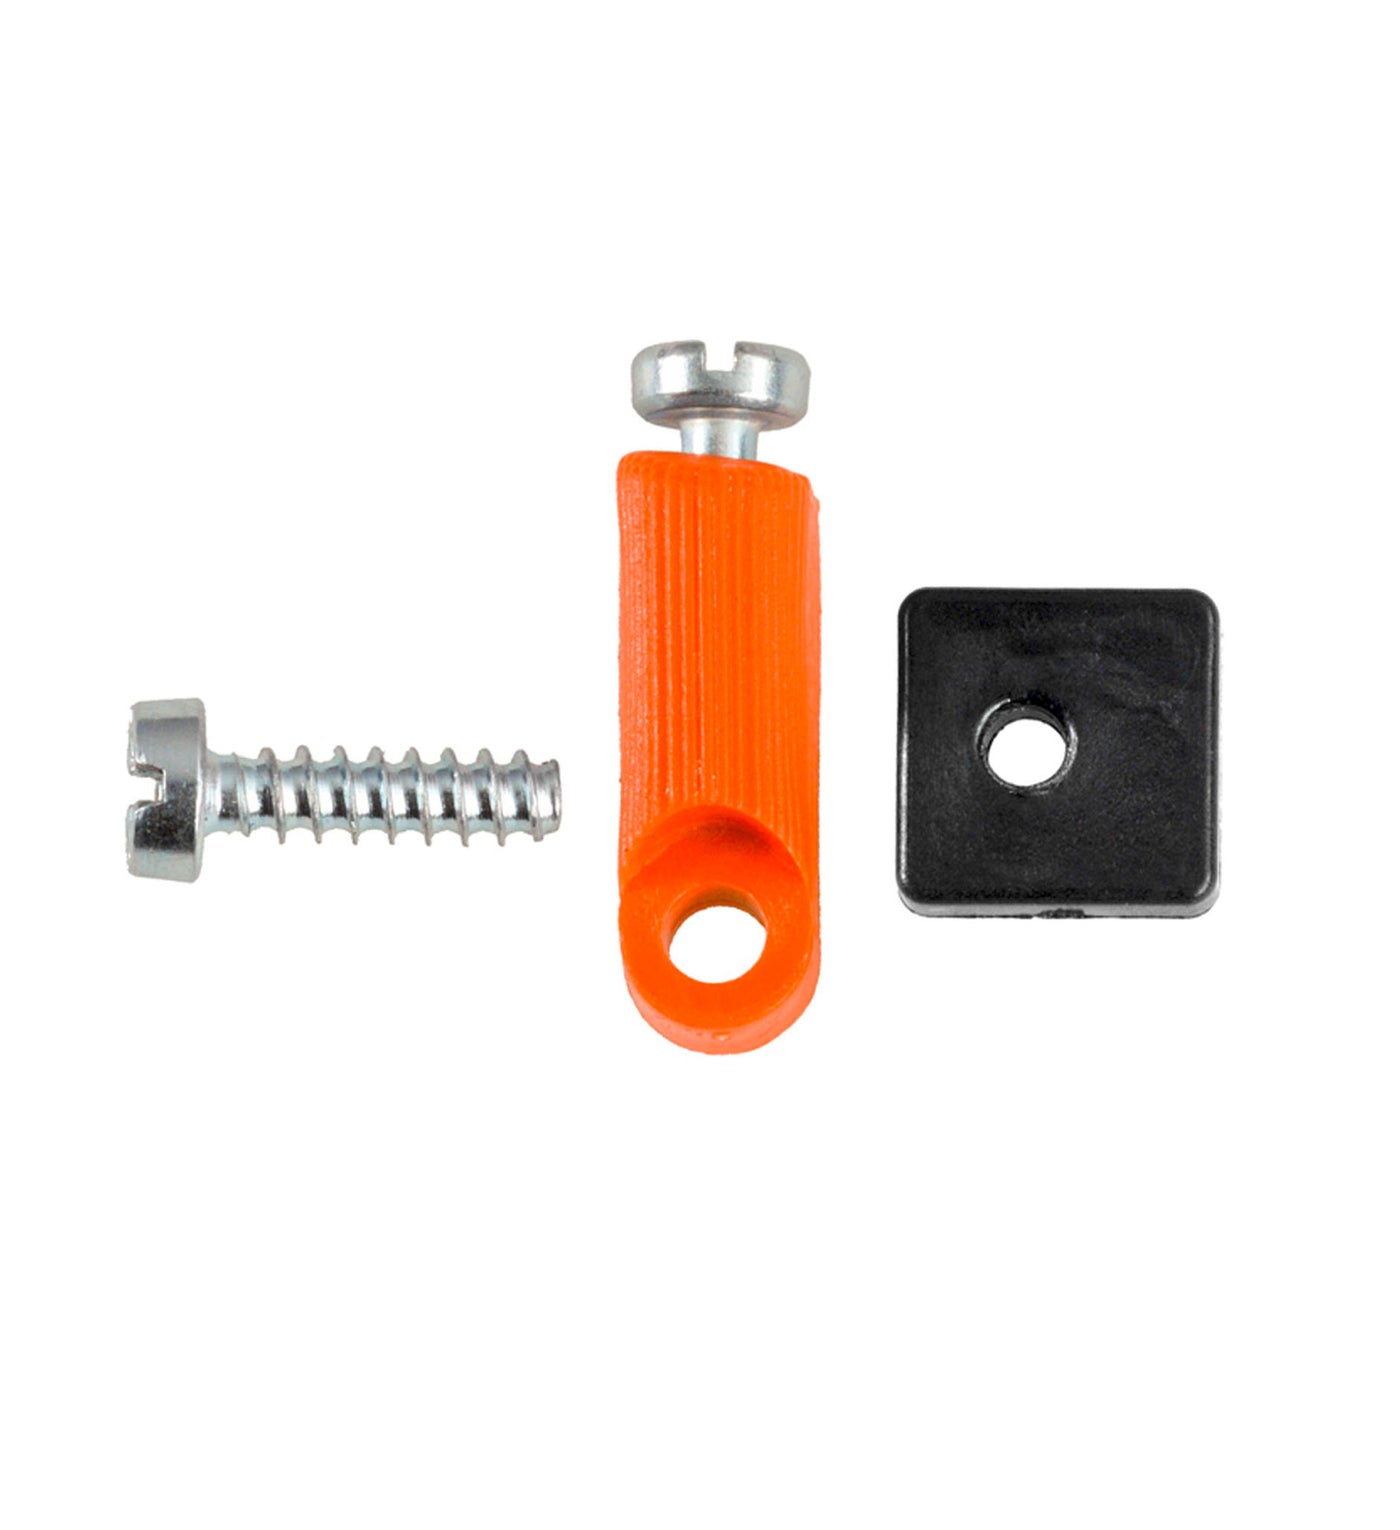 Replacement fastener (thumb lock) for the LO 1105, 3105, 3305, 3805, 3104, 3304, 3804, 3106, 3306, 3204/P90, 3204/16u19, 3204/20u25, 3704/20u25 Hose Cutters, 3604, 3606, 3806, 4104/y Industrial Cutters